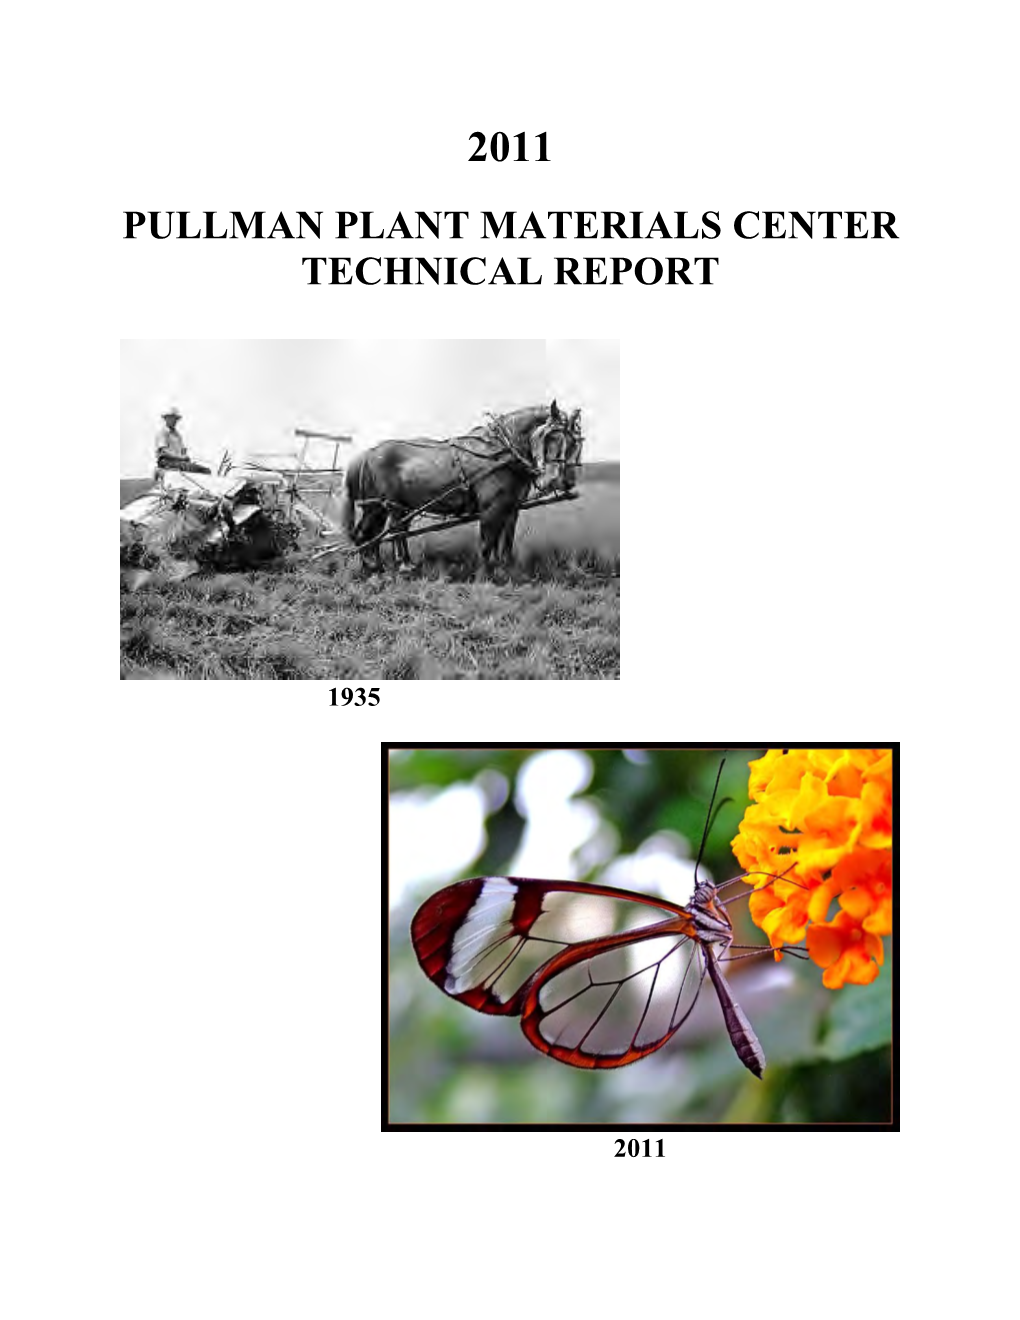 Pullman PMC 2011 Annual Technical Report